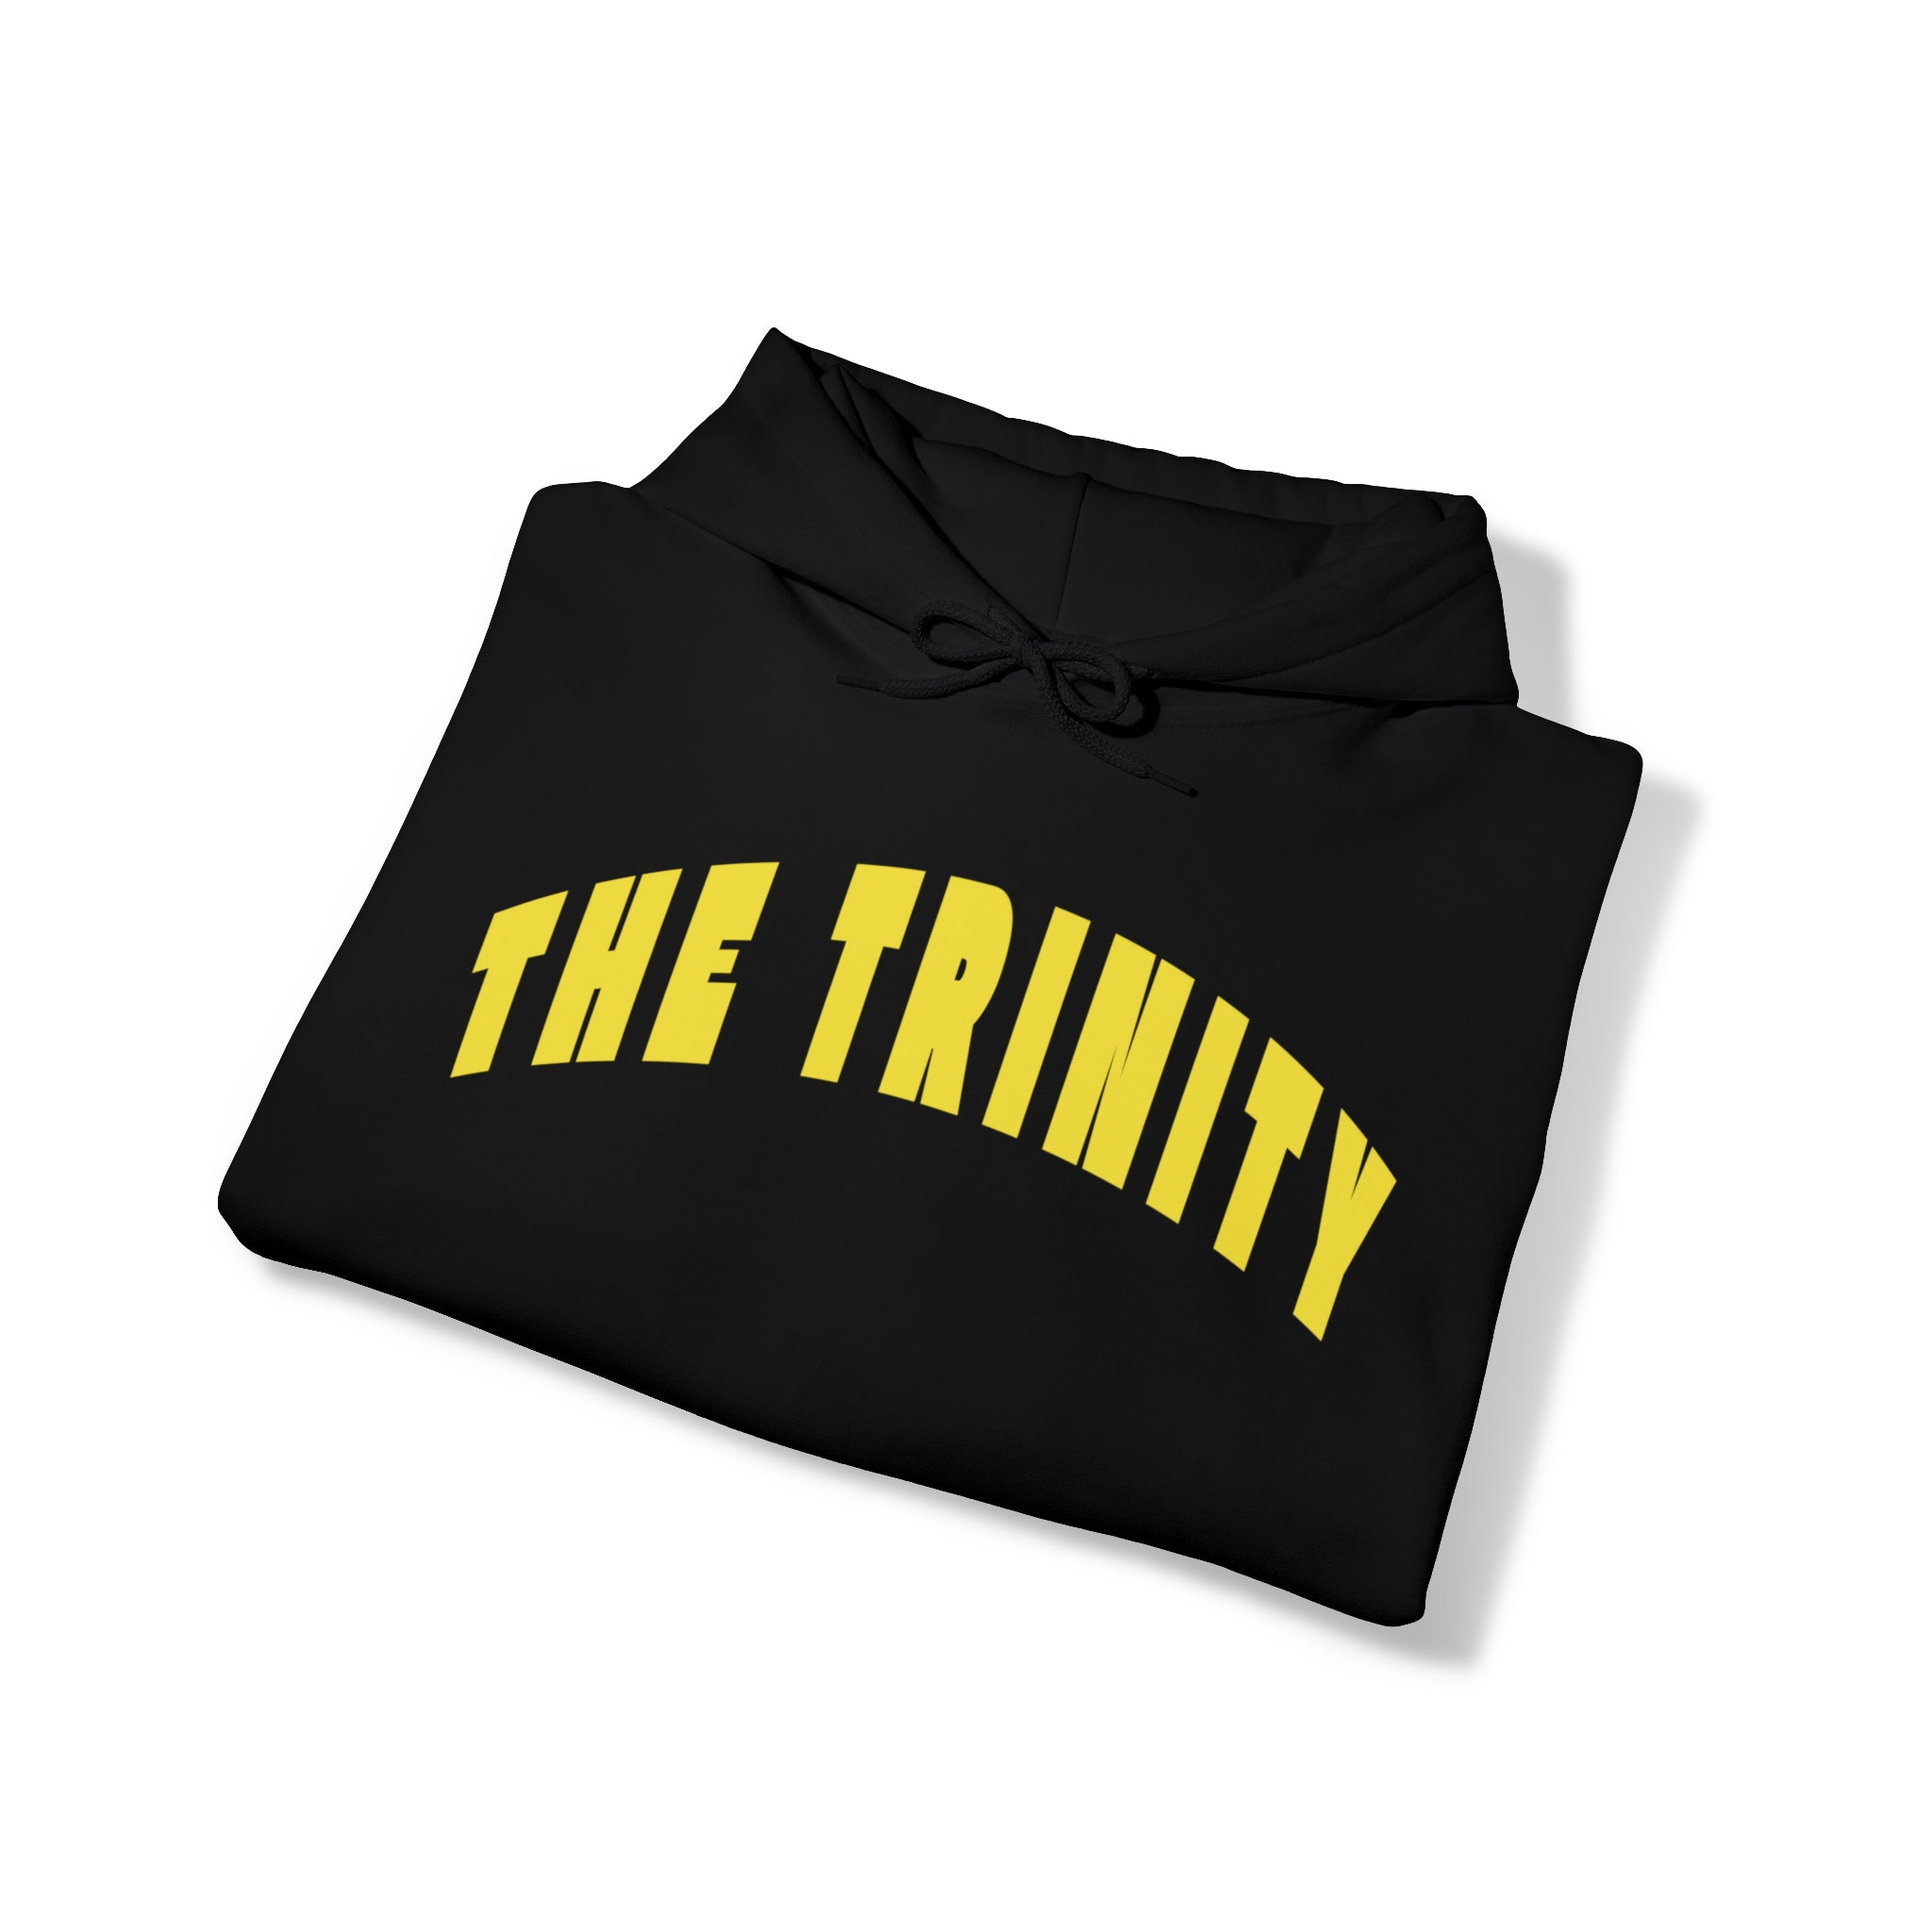 Original Trinity Logo Hoodie